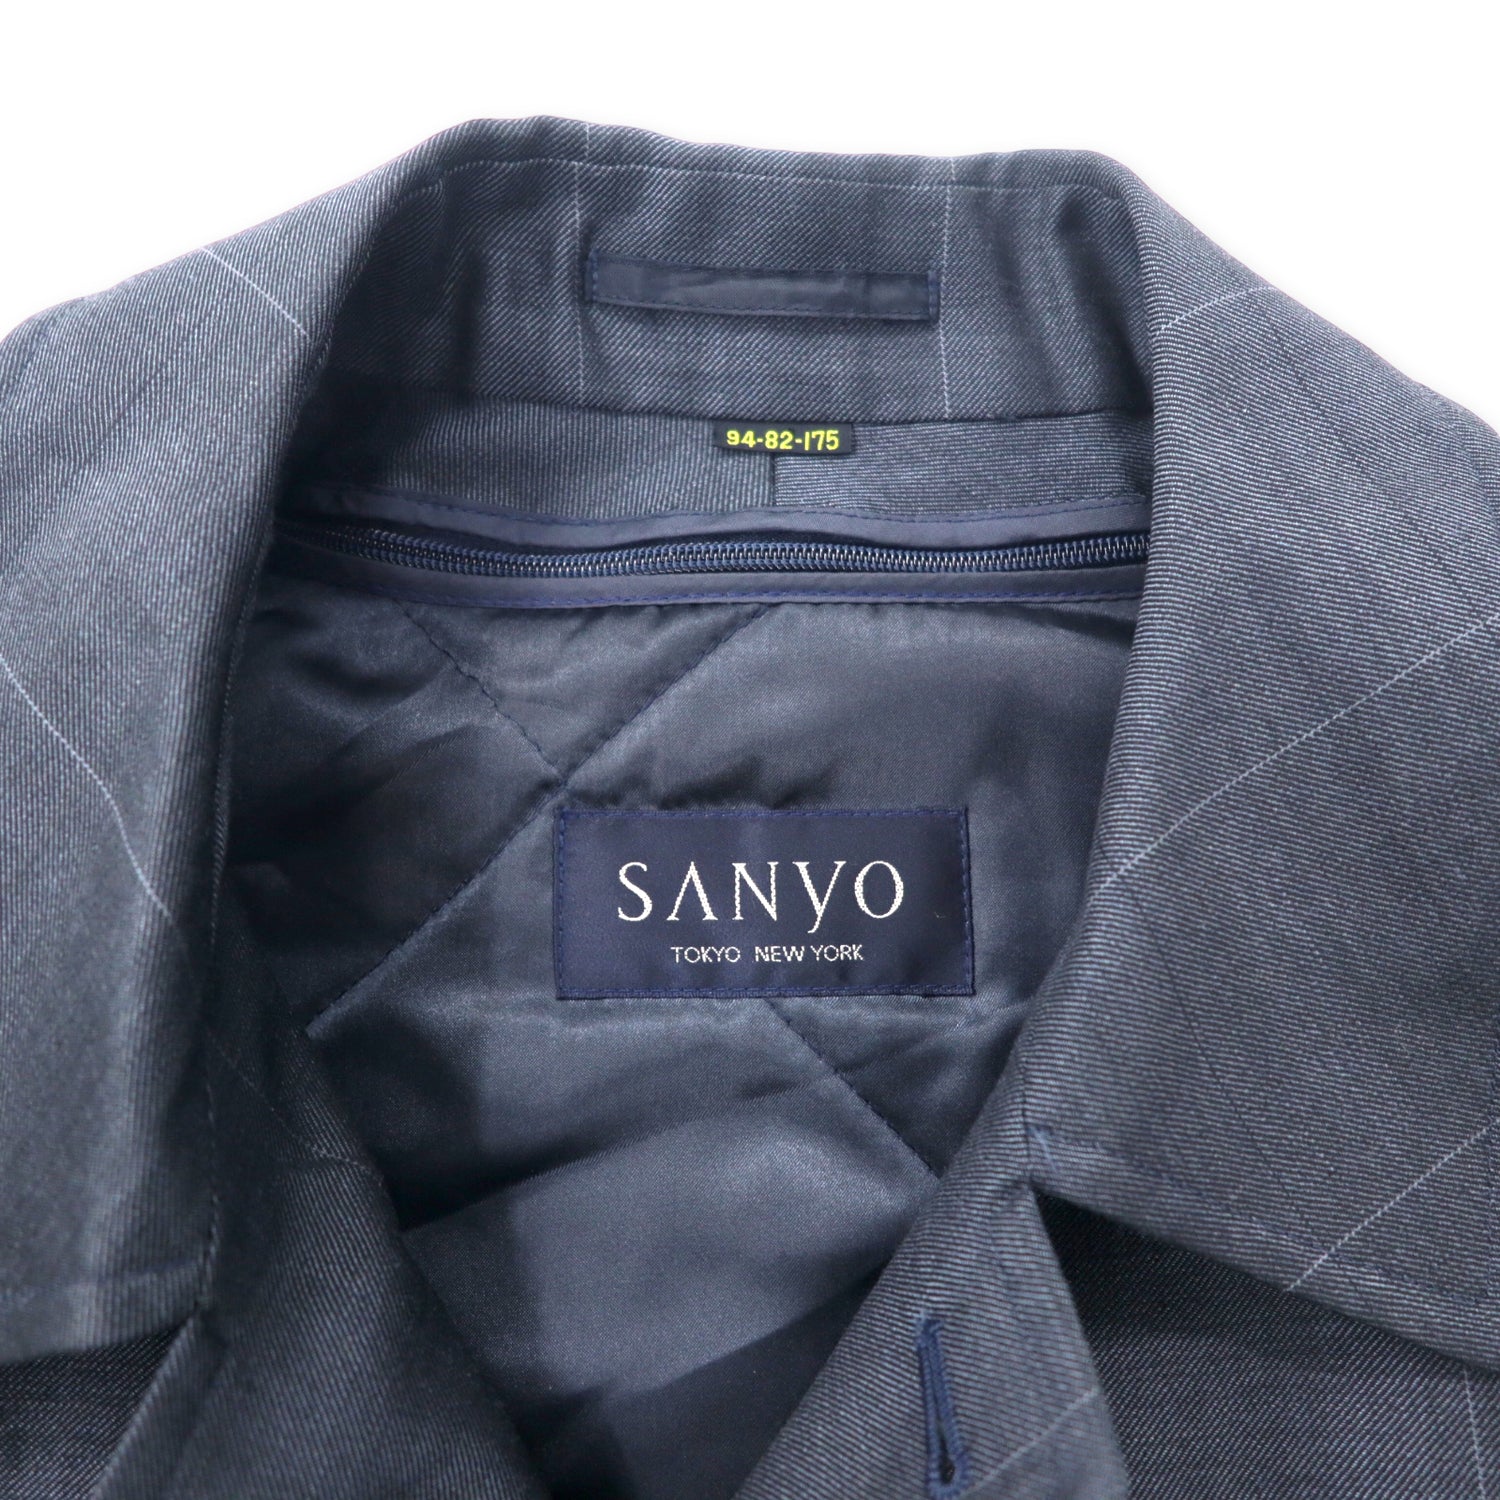 SANYO COAT 94-82-175 Navy CHECKED polyester wool mochir mixture